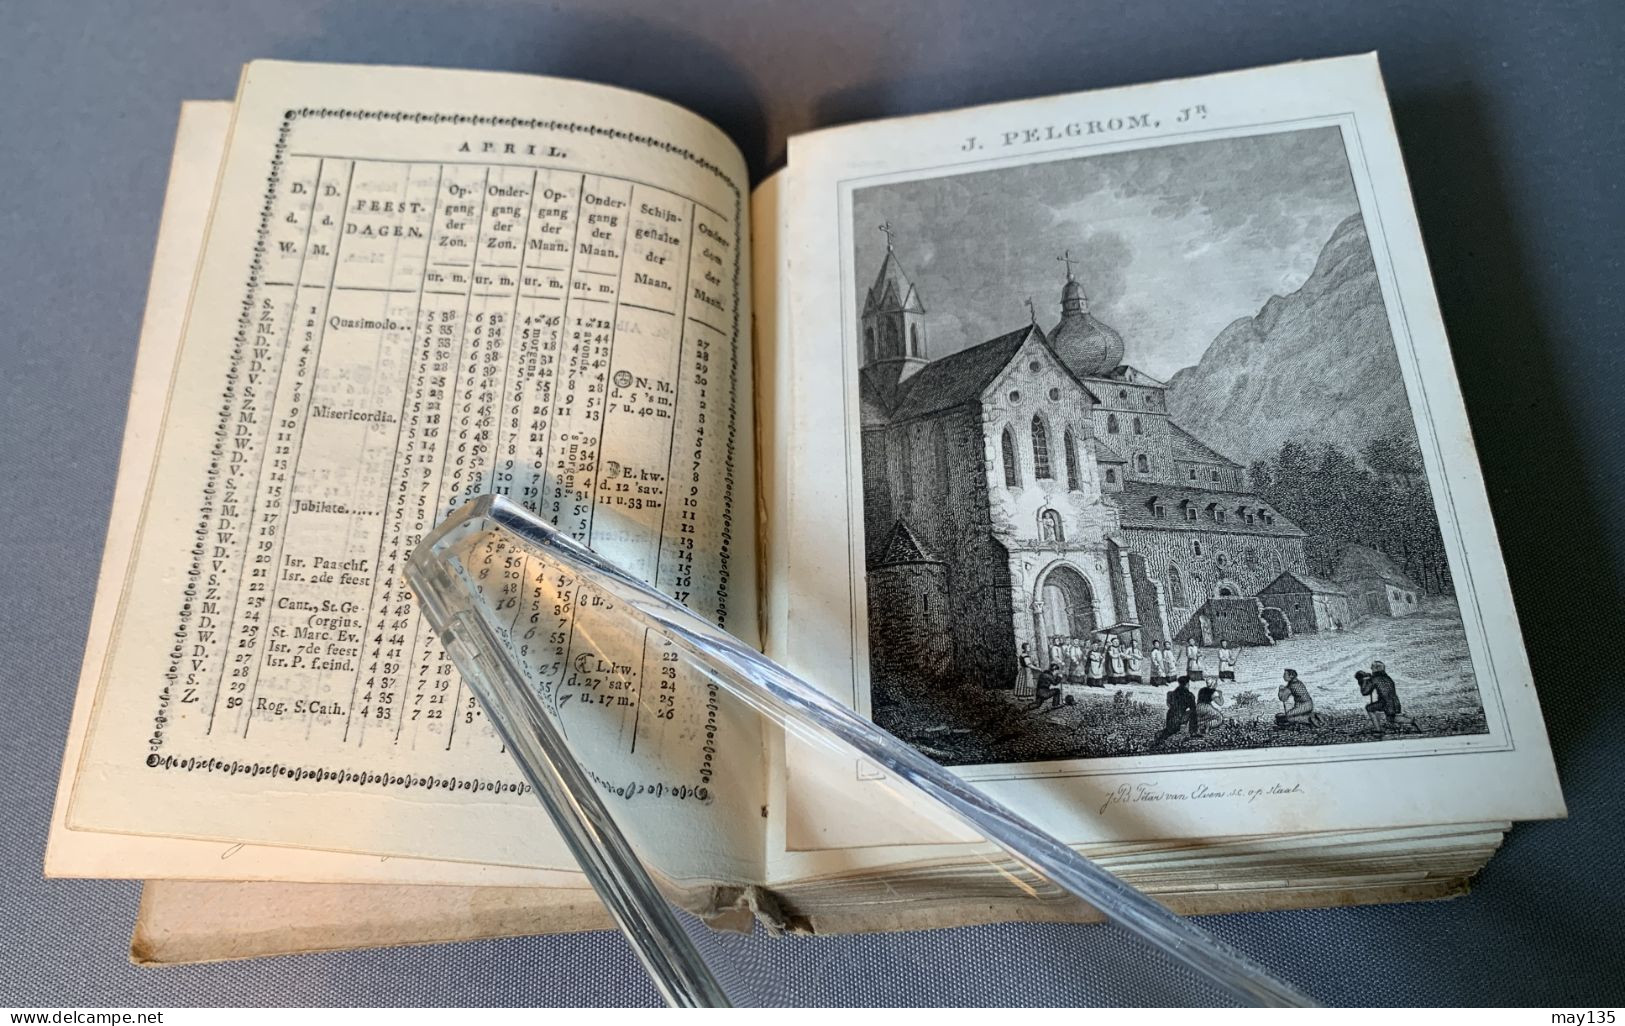 Anno 1837 - Nederlandsche Muzen - Almanak - J. Immerzeel , Junior Te Amsterdam - Antique